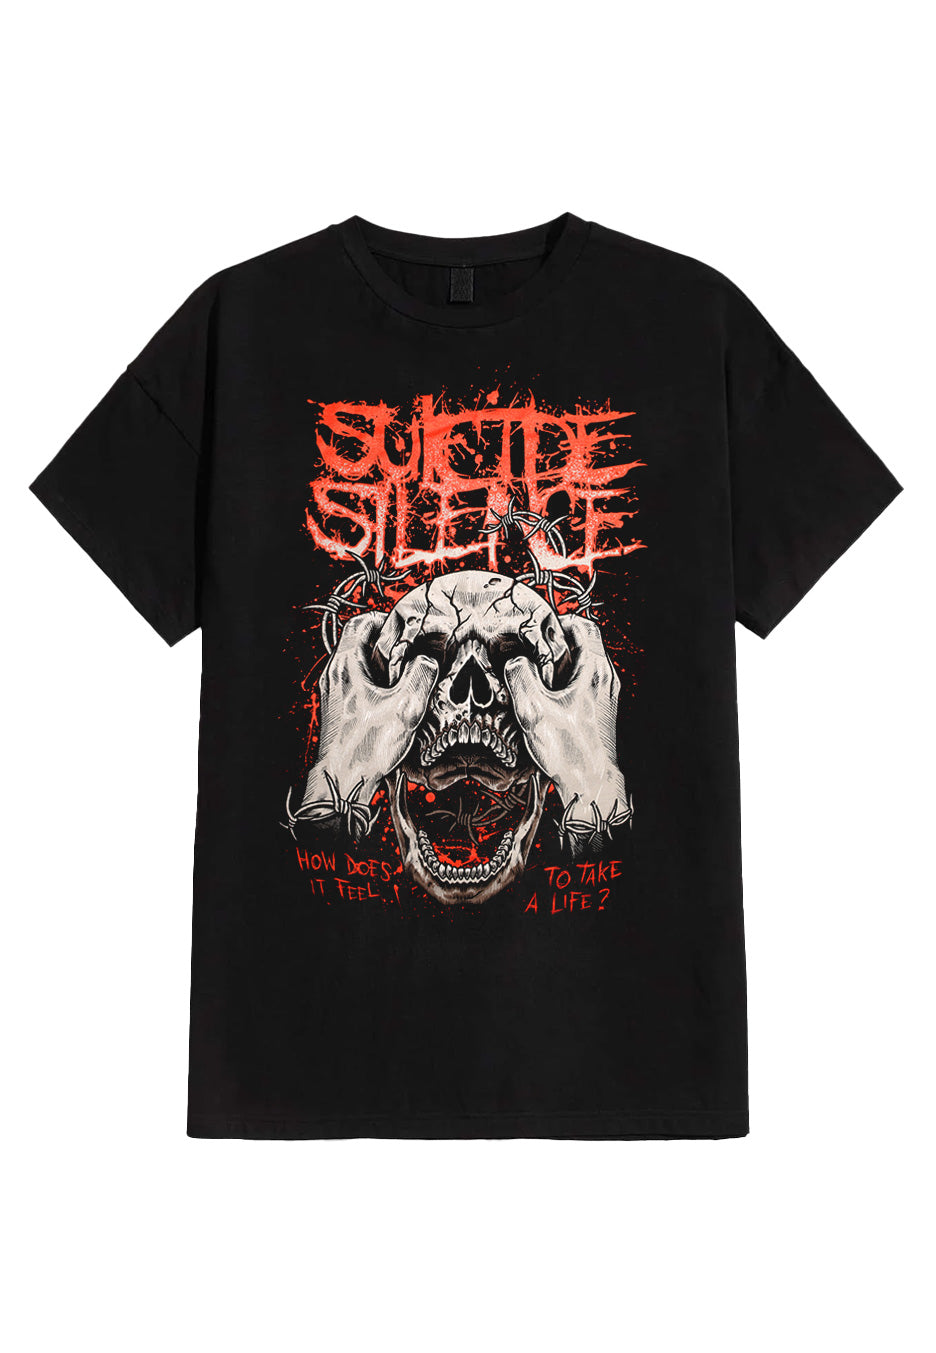 Suicide Silence - Hands Of A Killer - T-Shirt